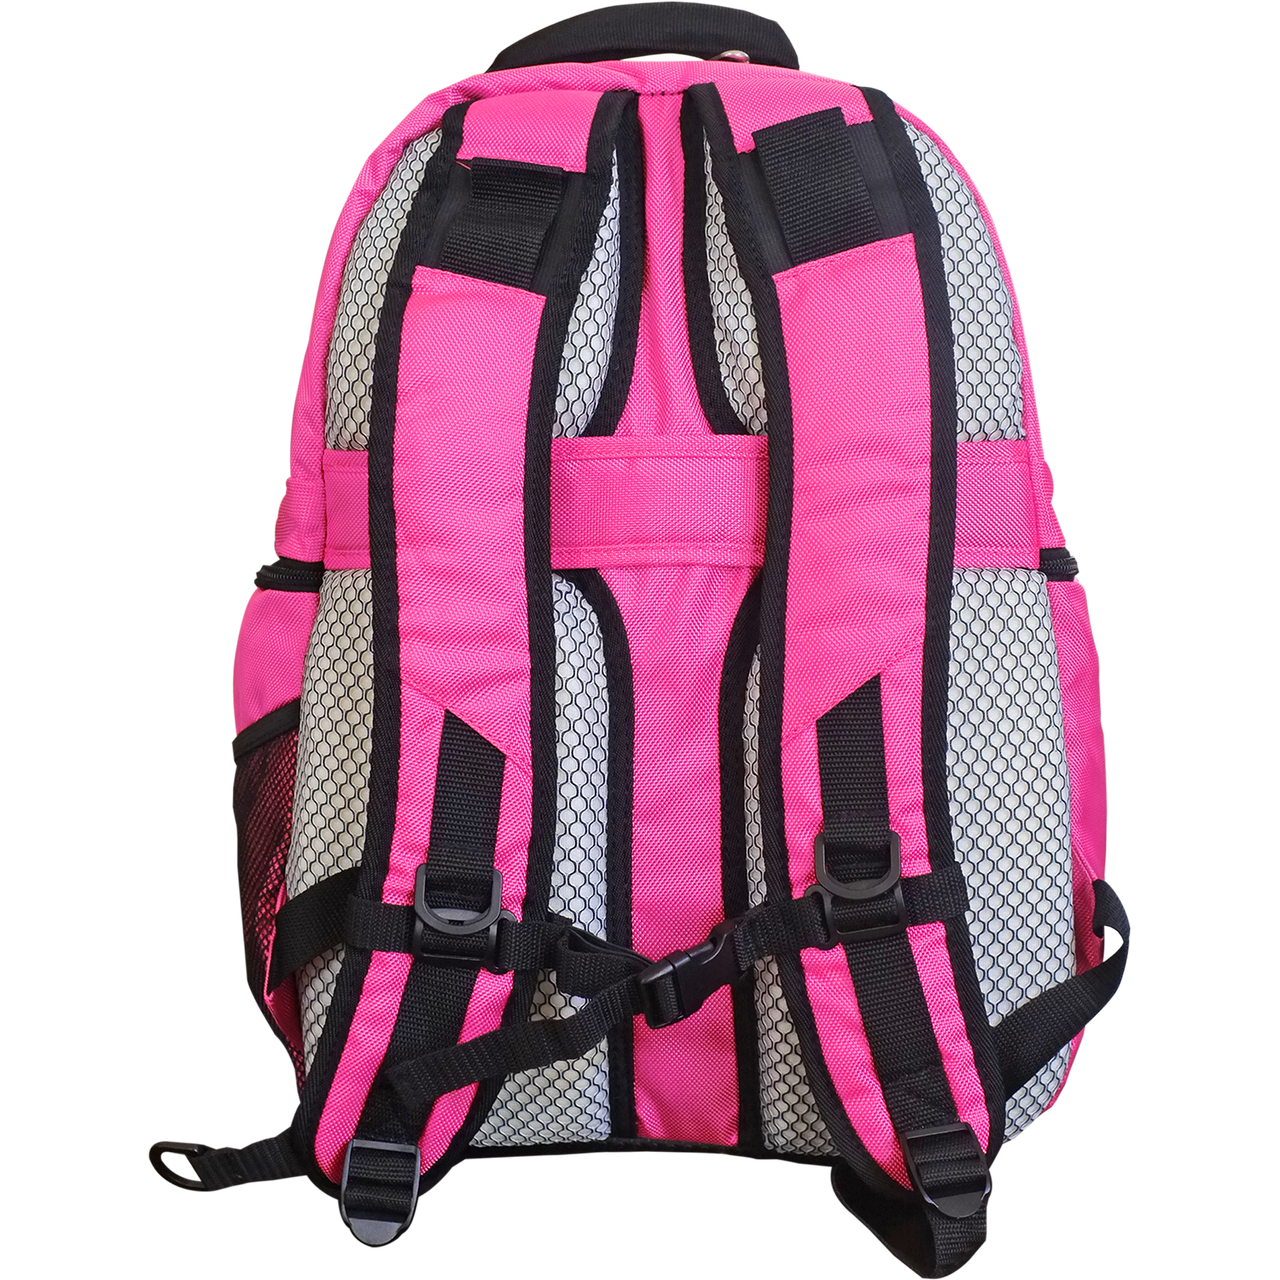 Portland Trail Blazers Laptop Backpack in Pink